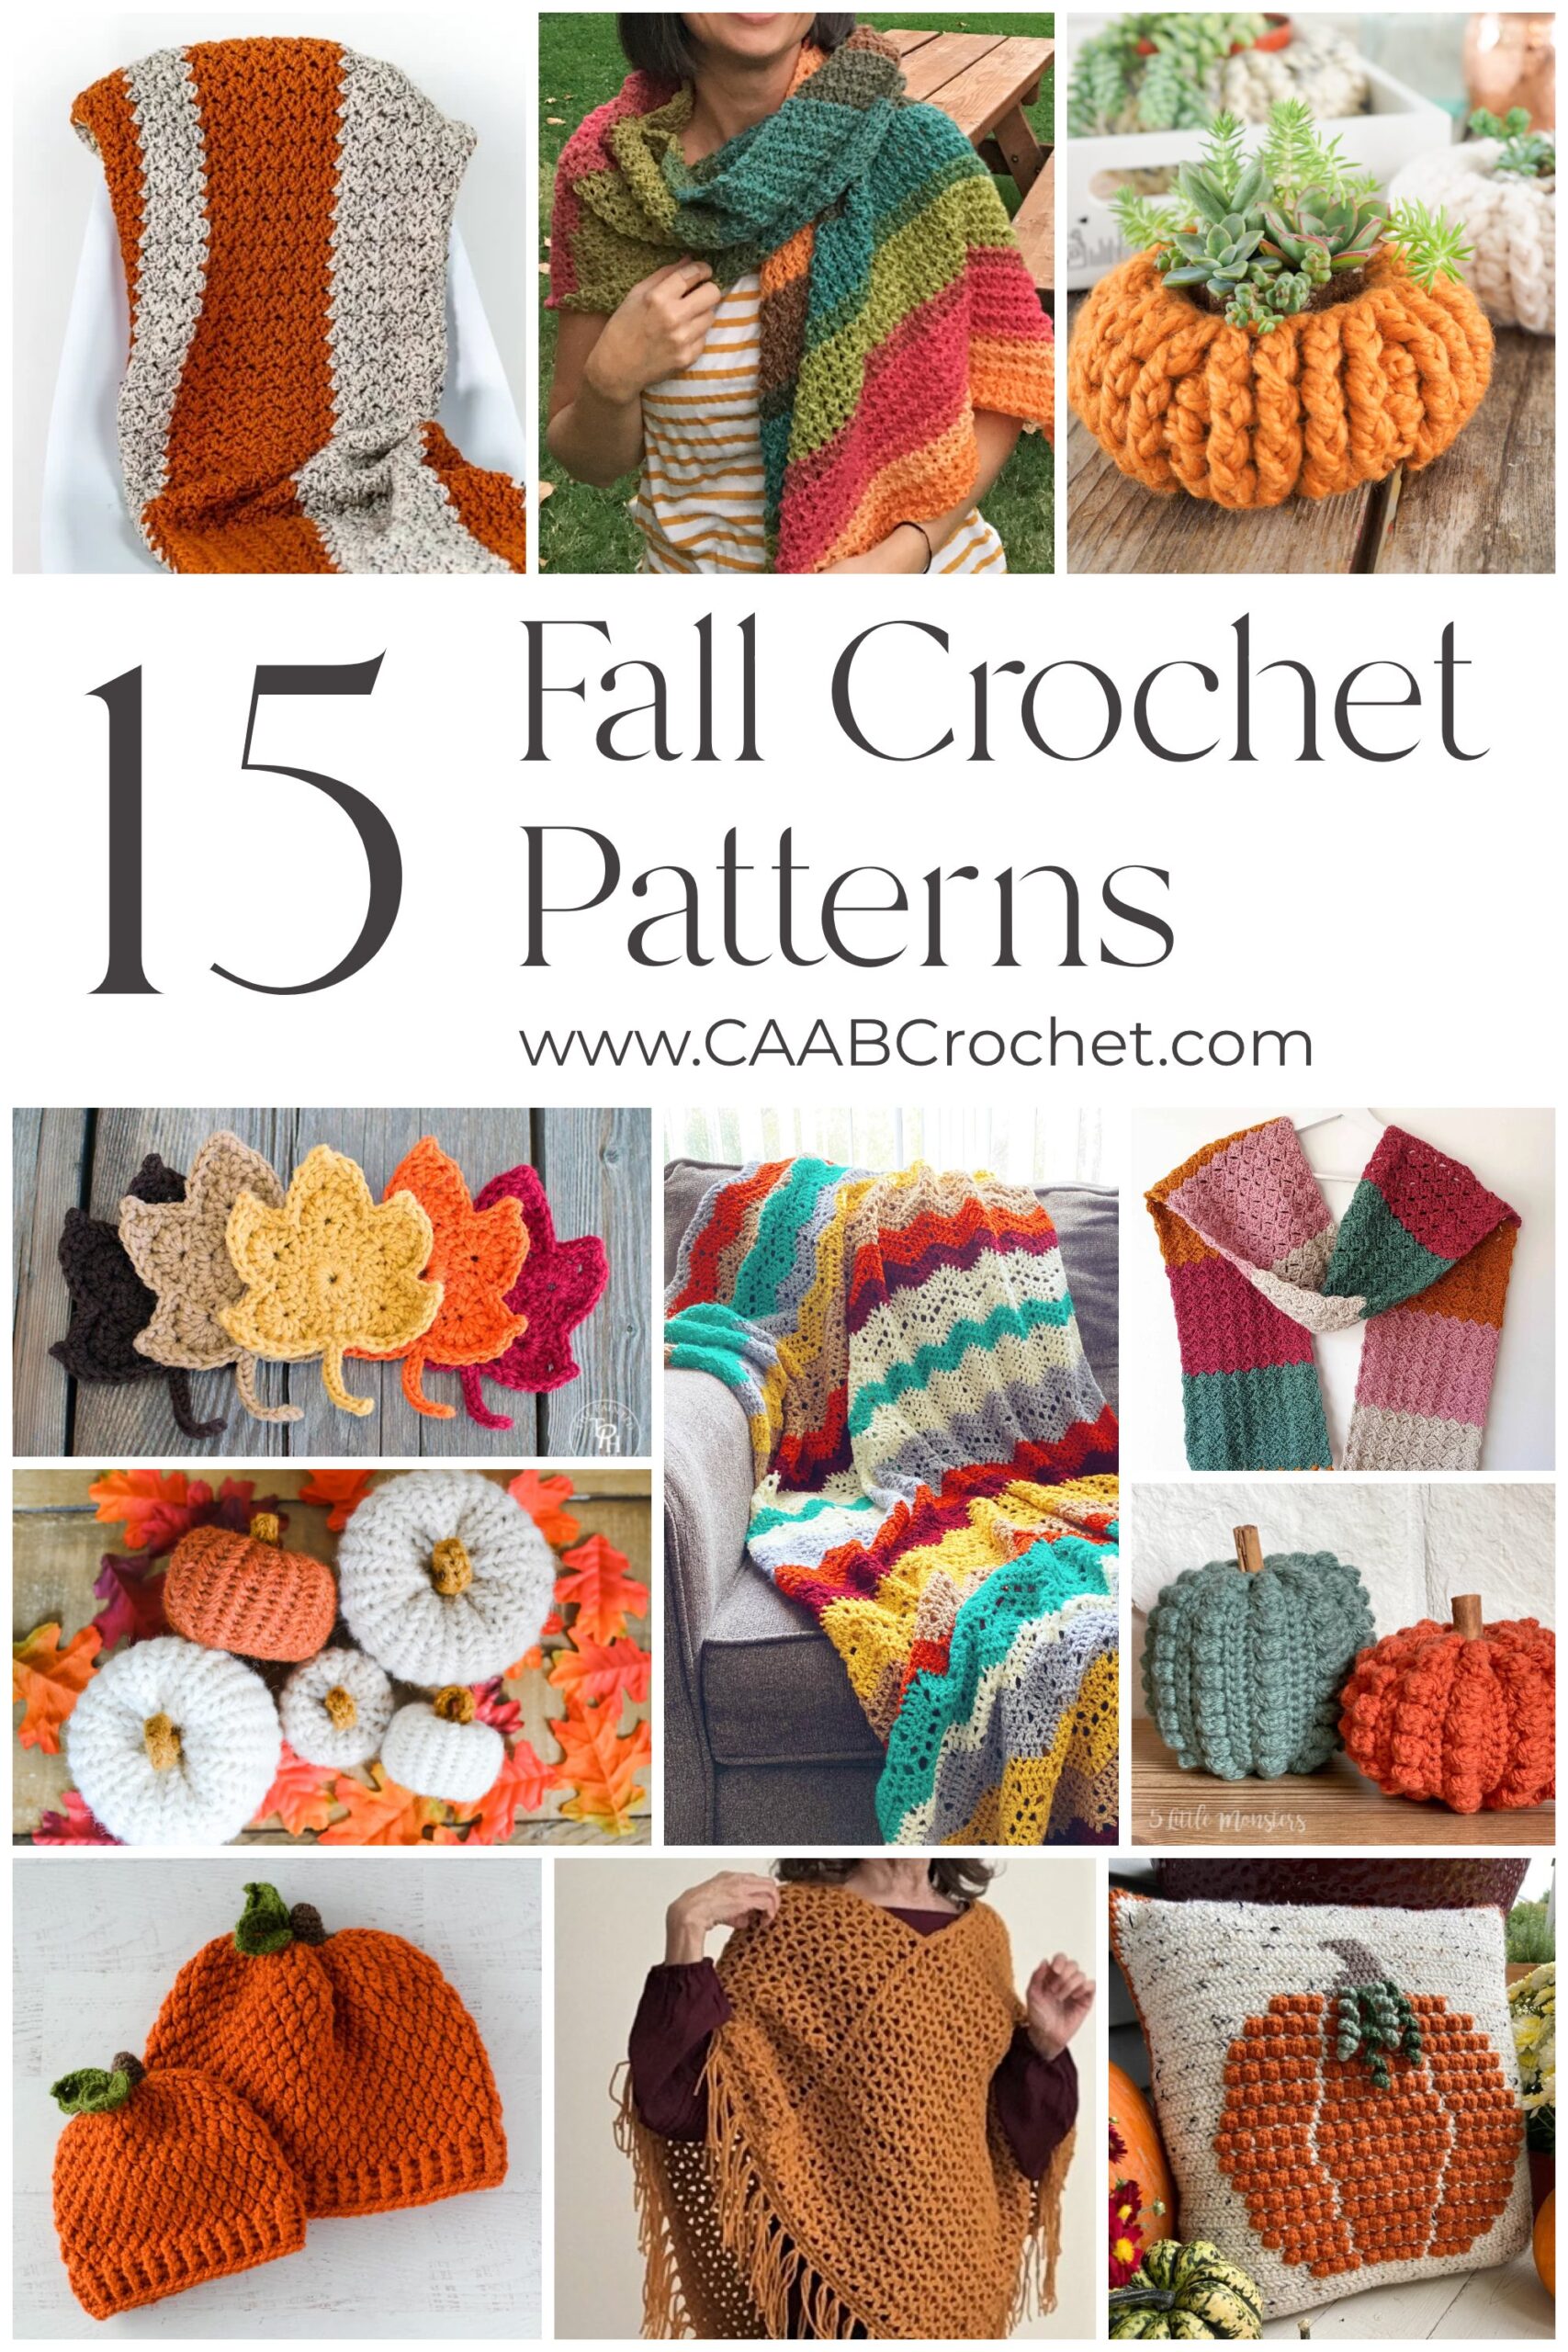 10 Free Crochet Patterns for Cozy Farmhouse Decor - CrochetKim™